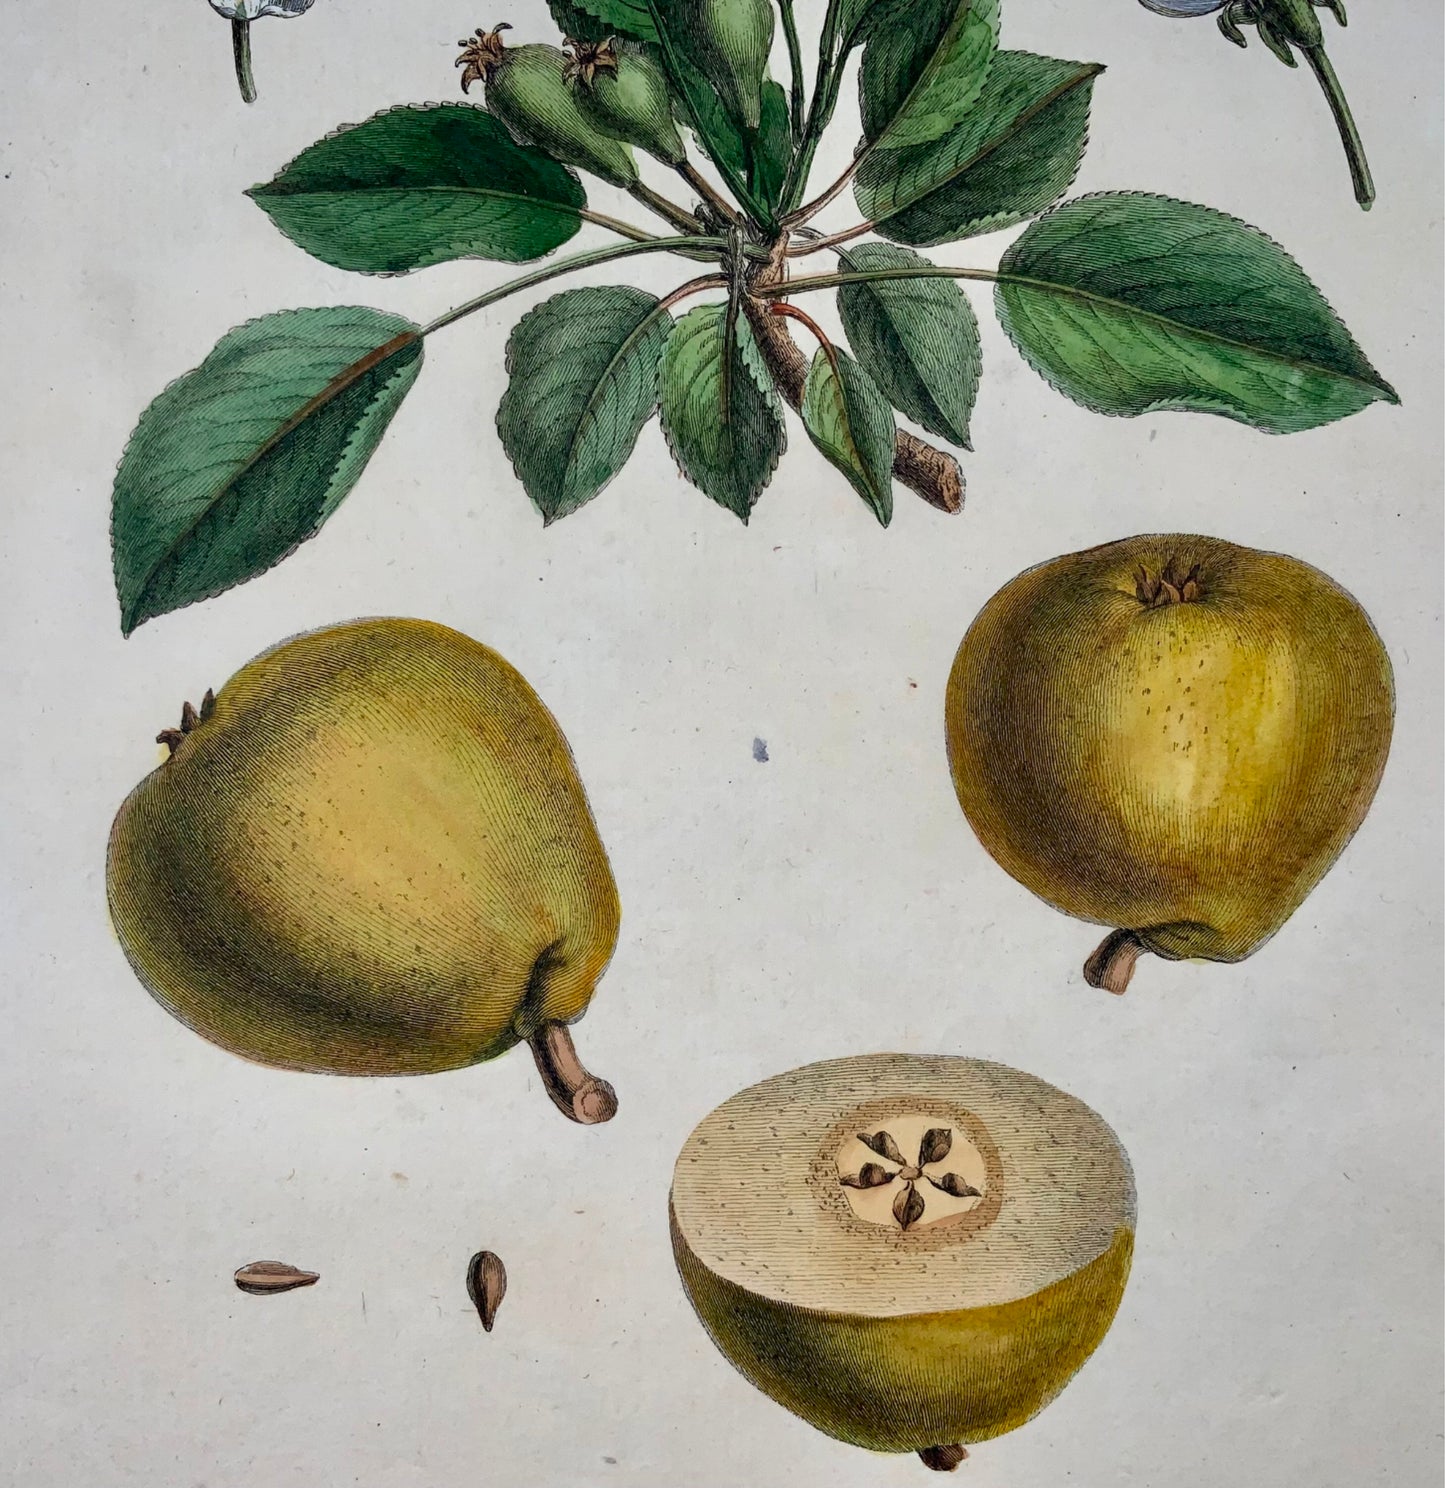 1768 Pera, Clair-Dame, frutta, Duhamel du Monceau, quarto grande, colore a mano, 